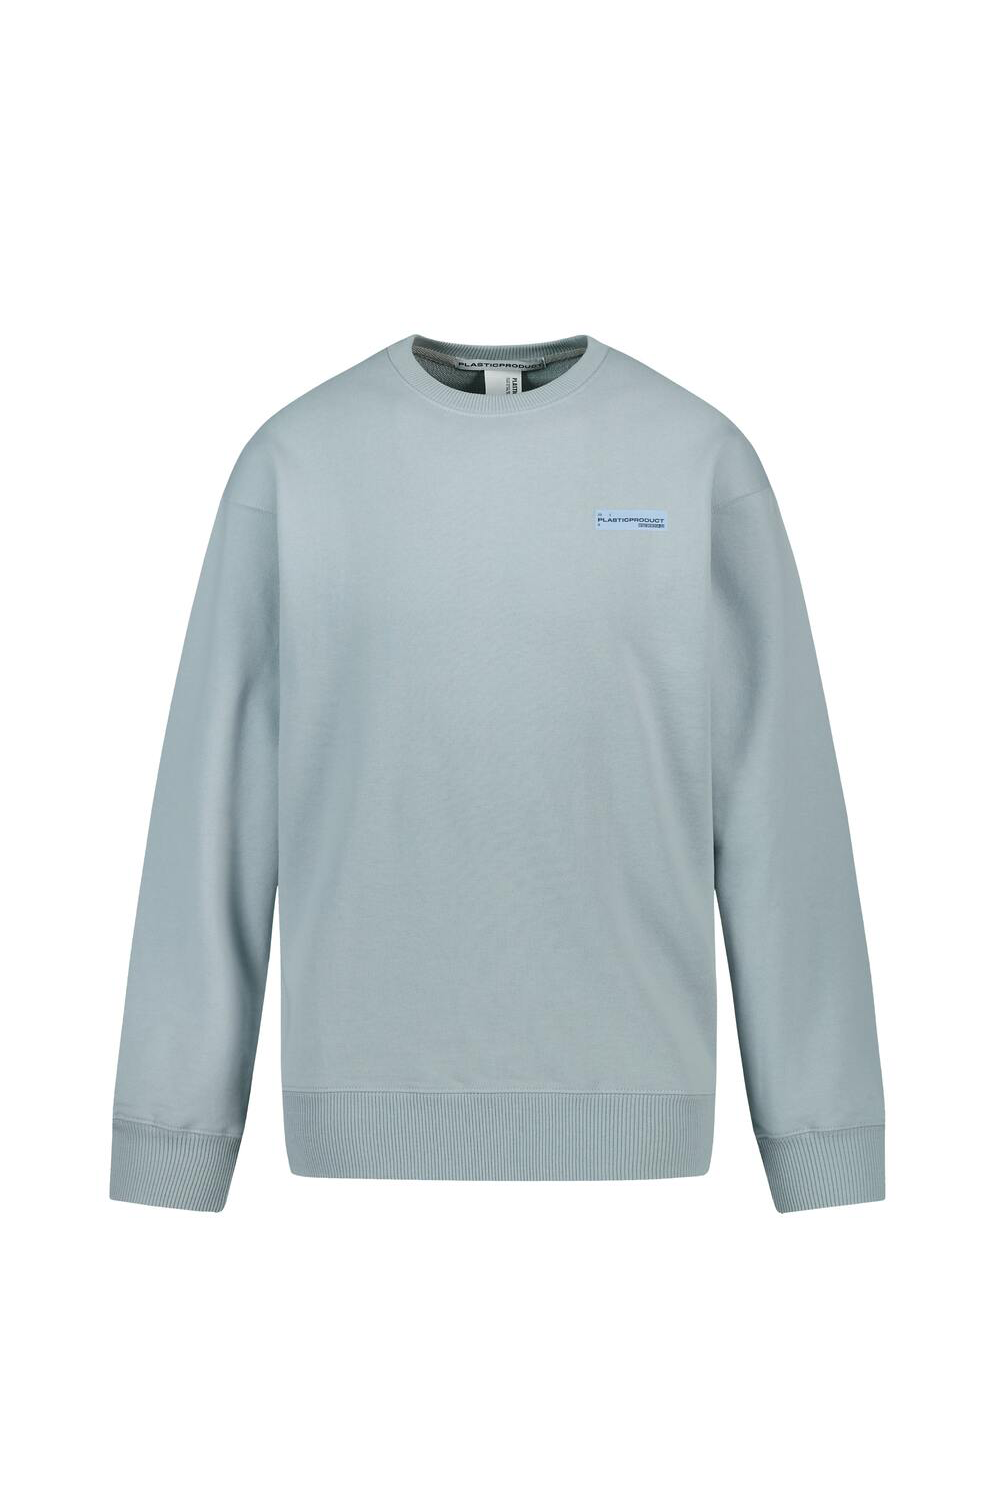 Standard Sweatshirt - Cement Grey